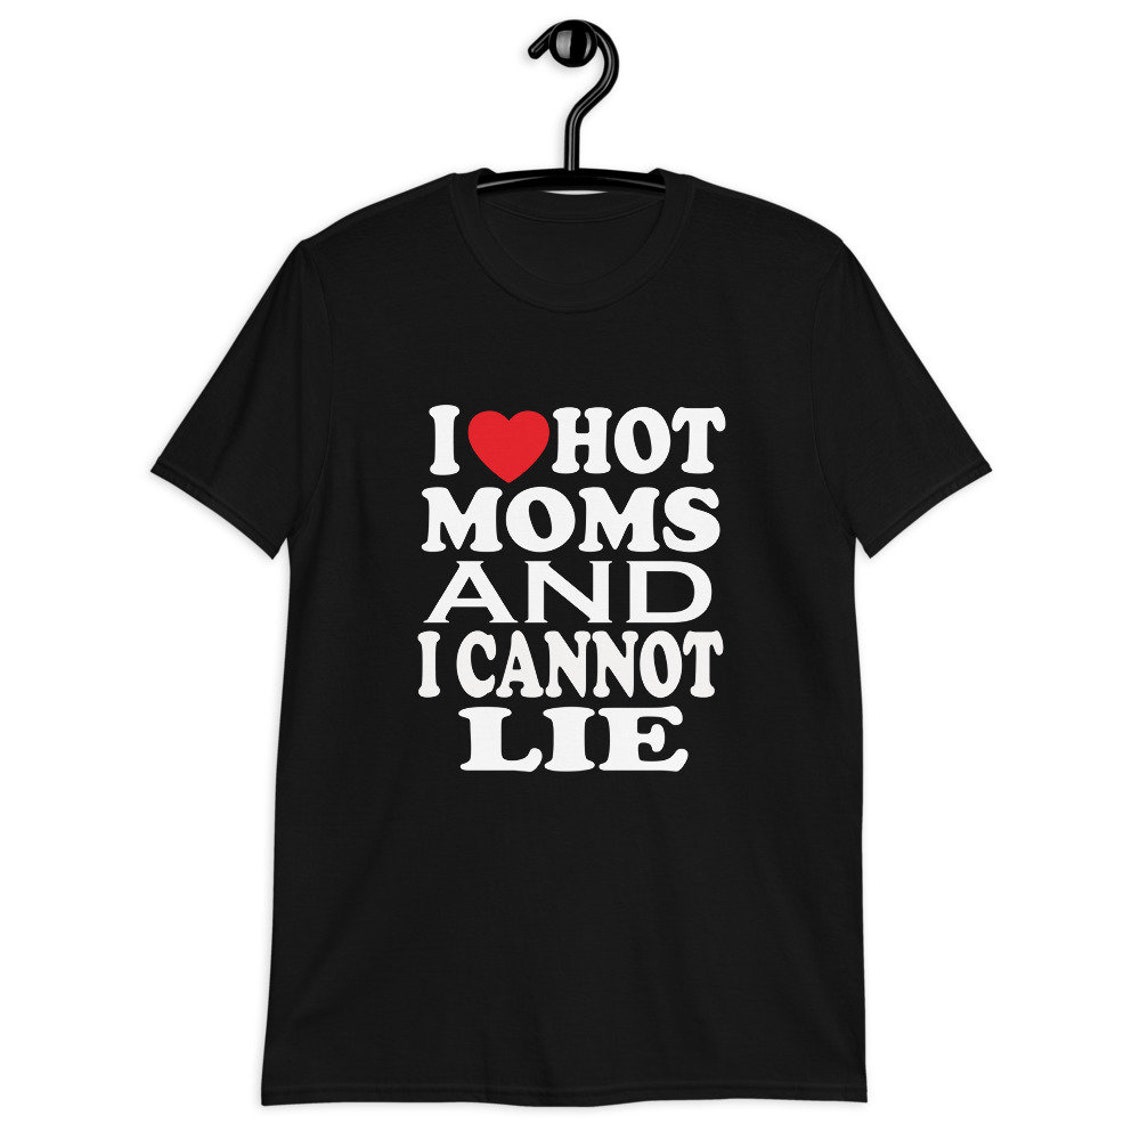 I love hot moms tshirt, Hot mom shirt, Funny mom shirt